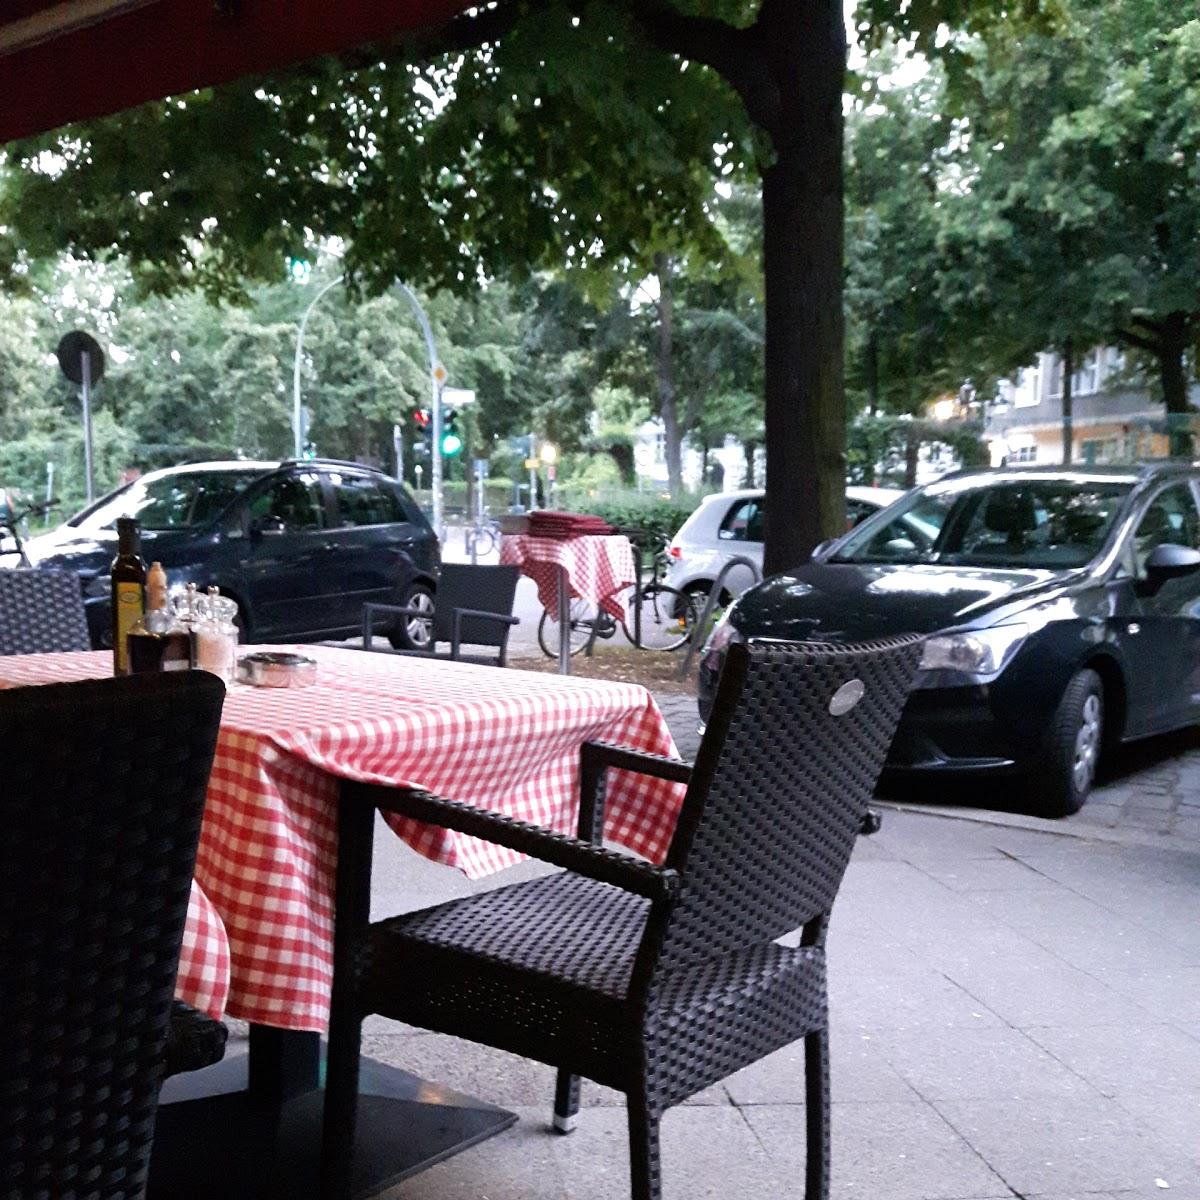 Restaurant "Salumeria da Pino" in Berlin